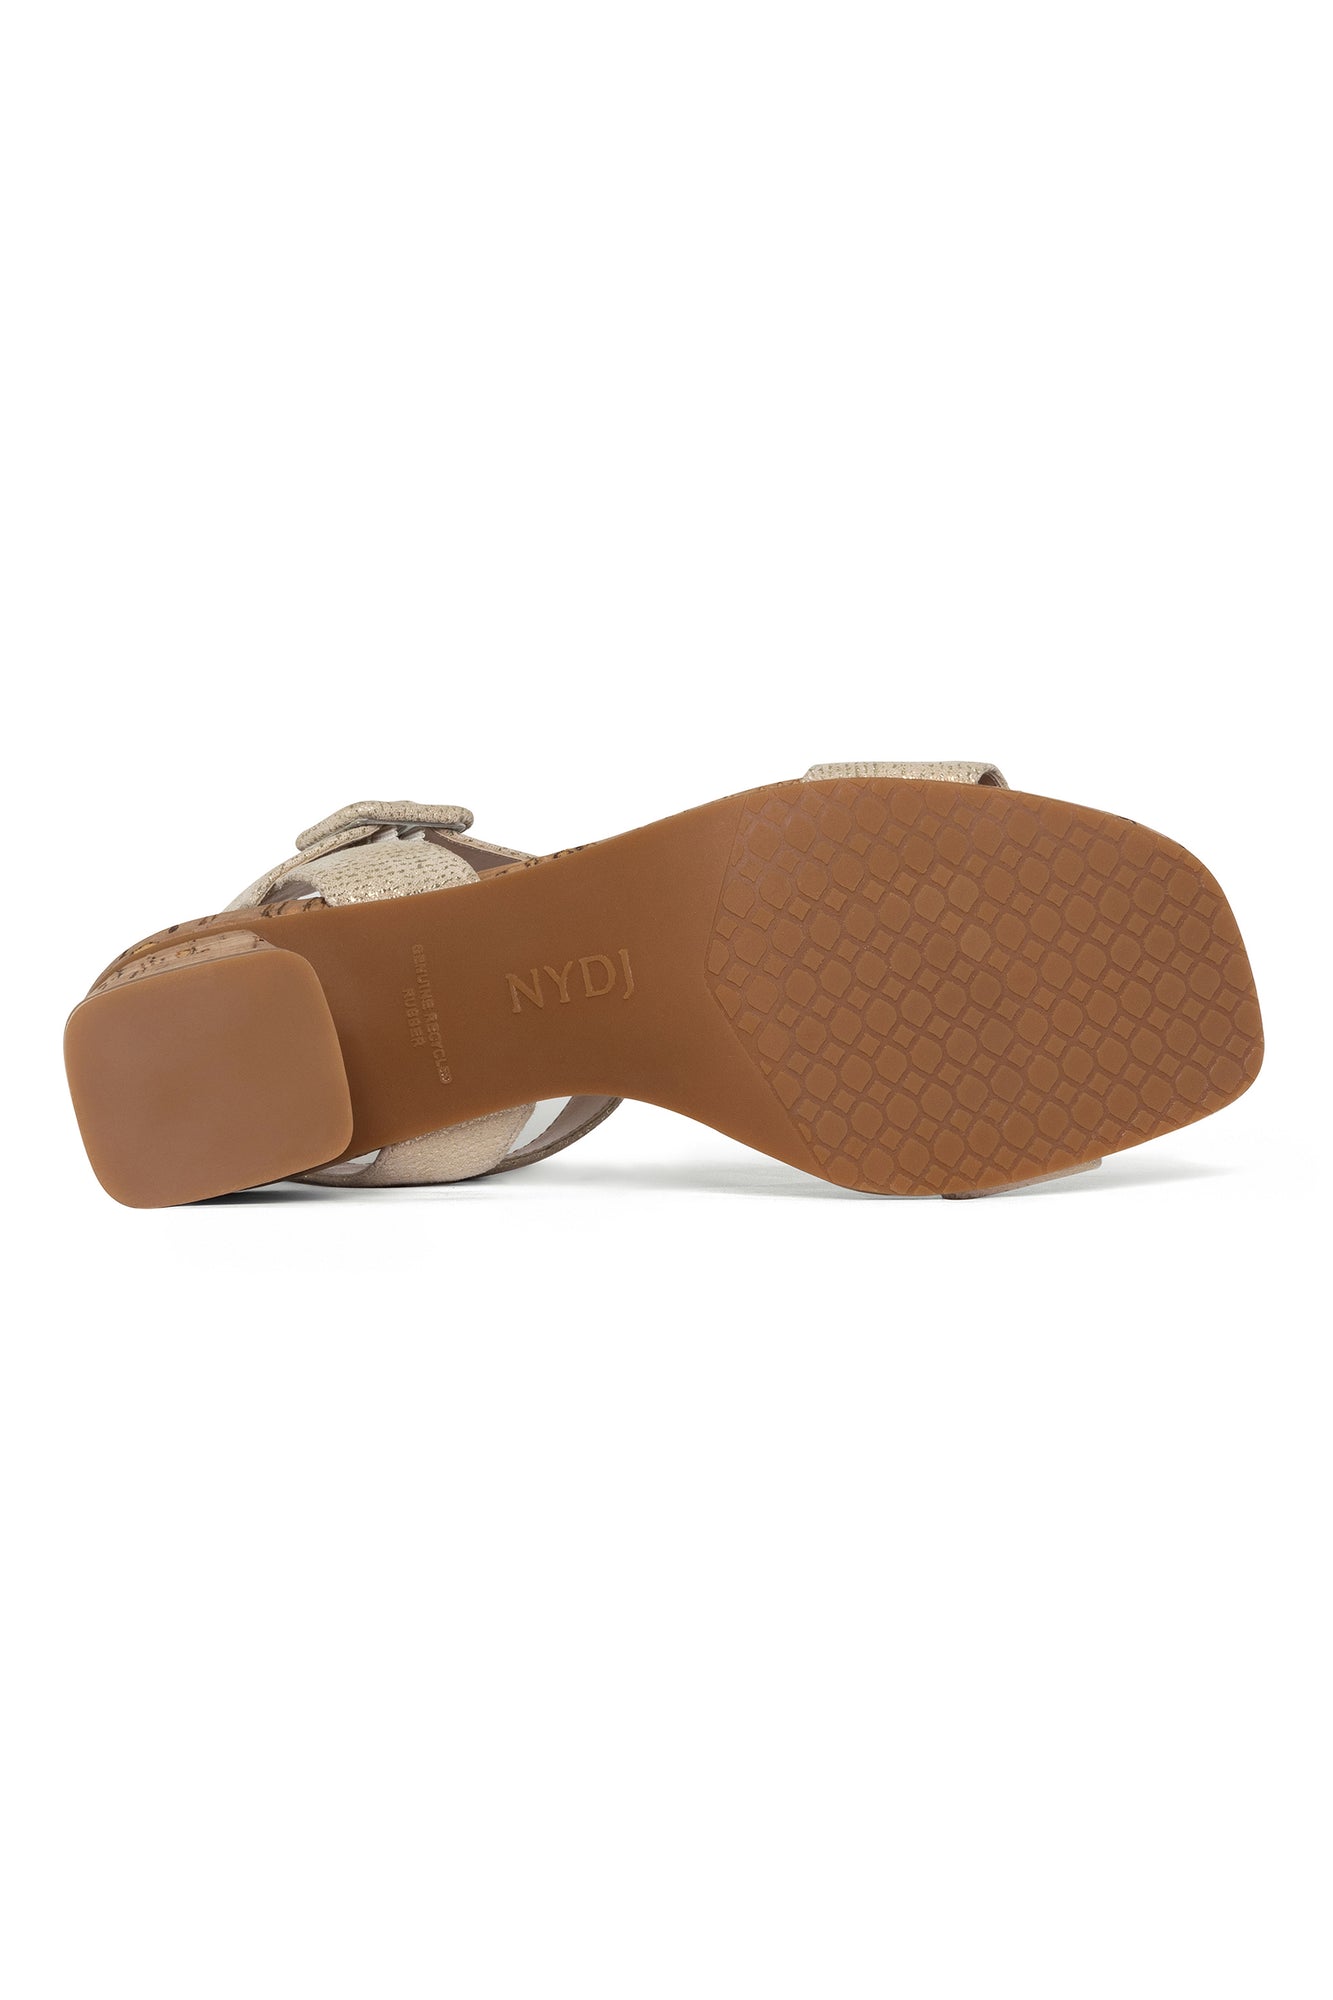 NYDJ Gaiana High Heel Sandals In Metallic Nappa Leather - Gold